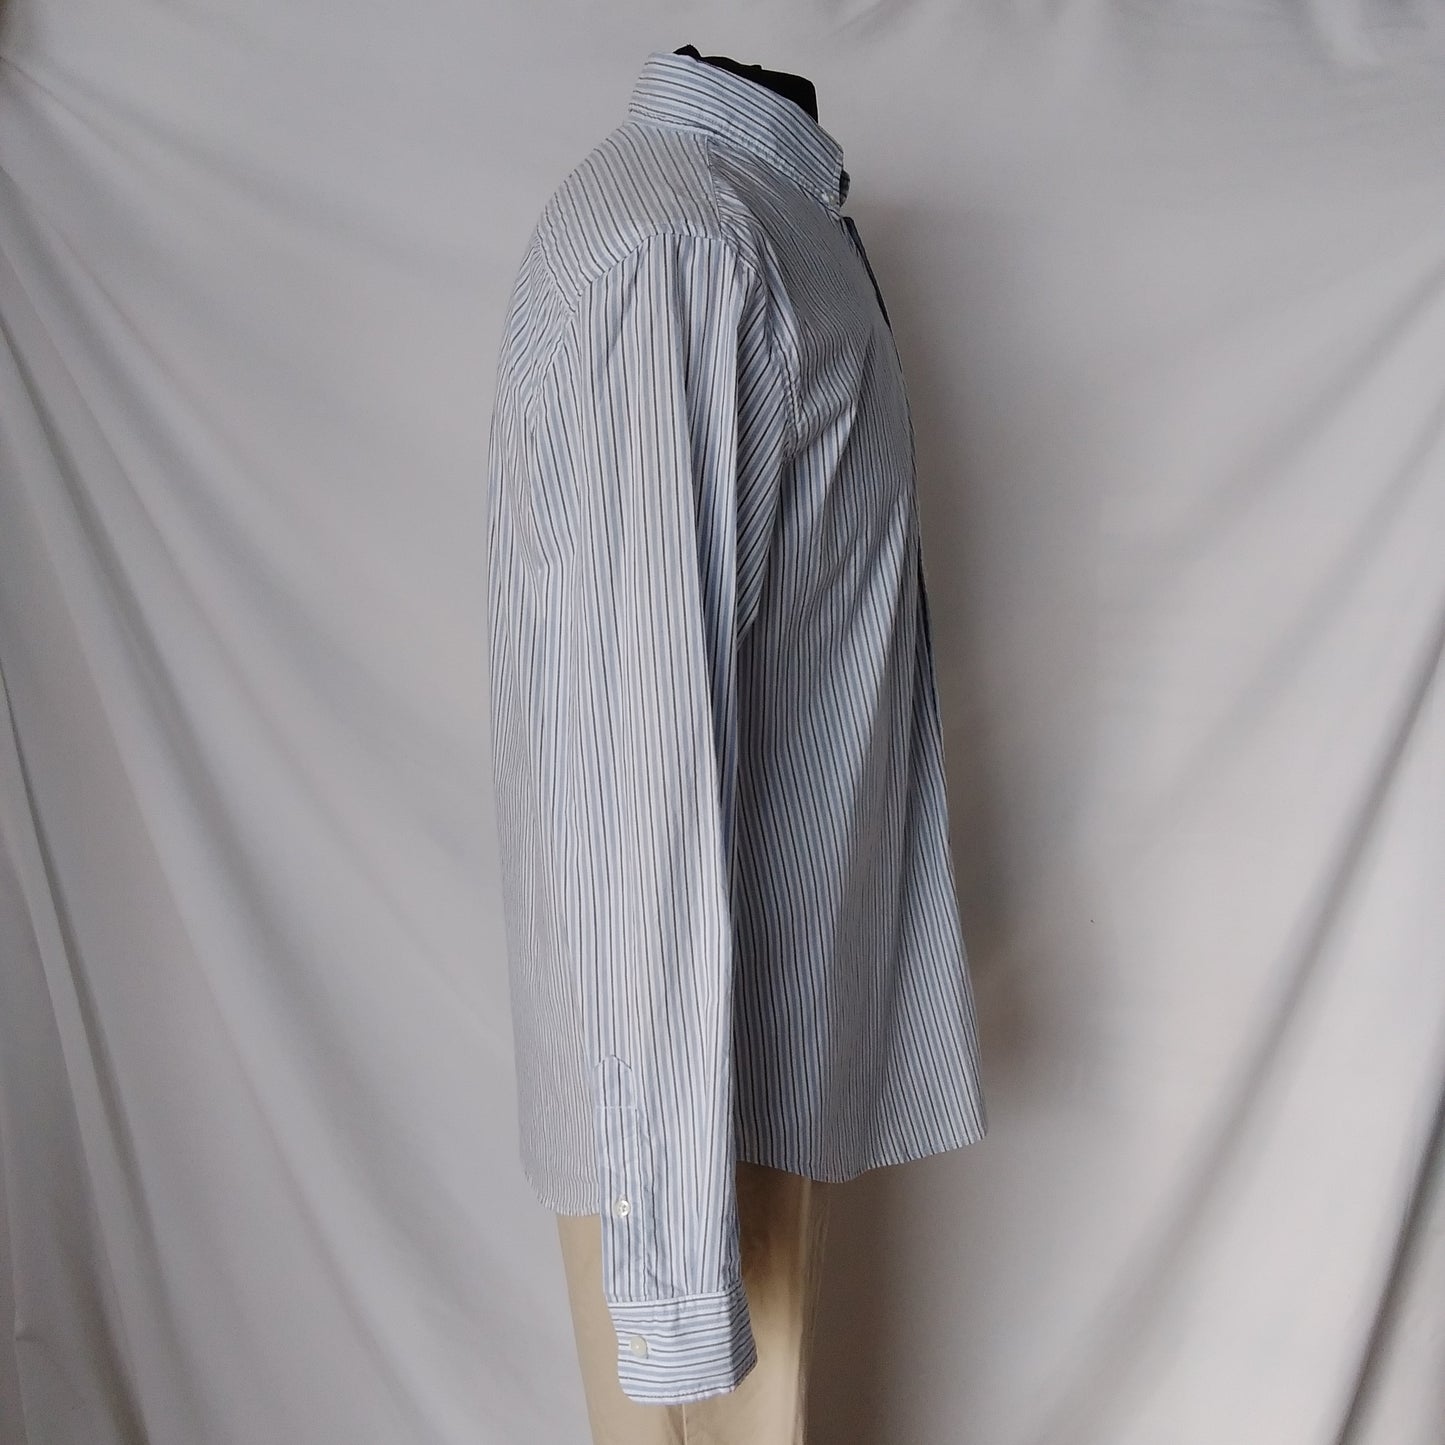 NWT - GAP Blue Striped Standard Fit Long-Sleeve Shirt - M